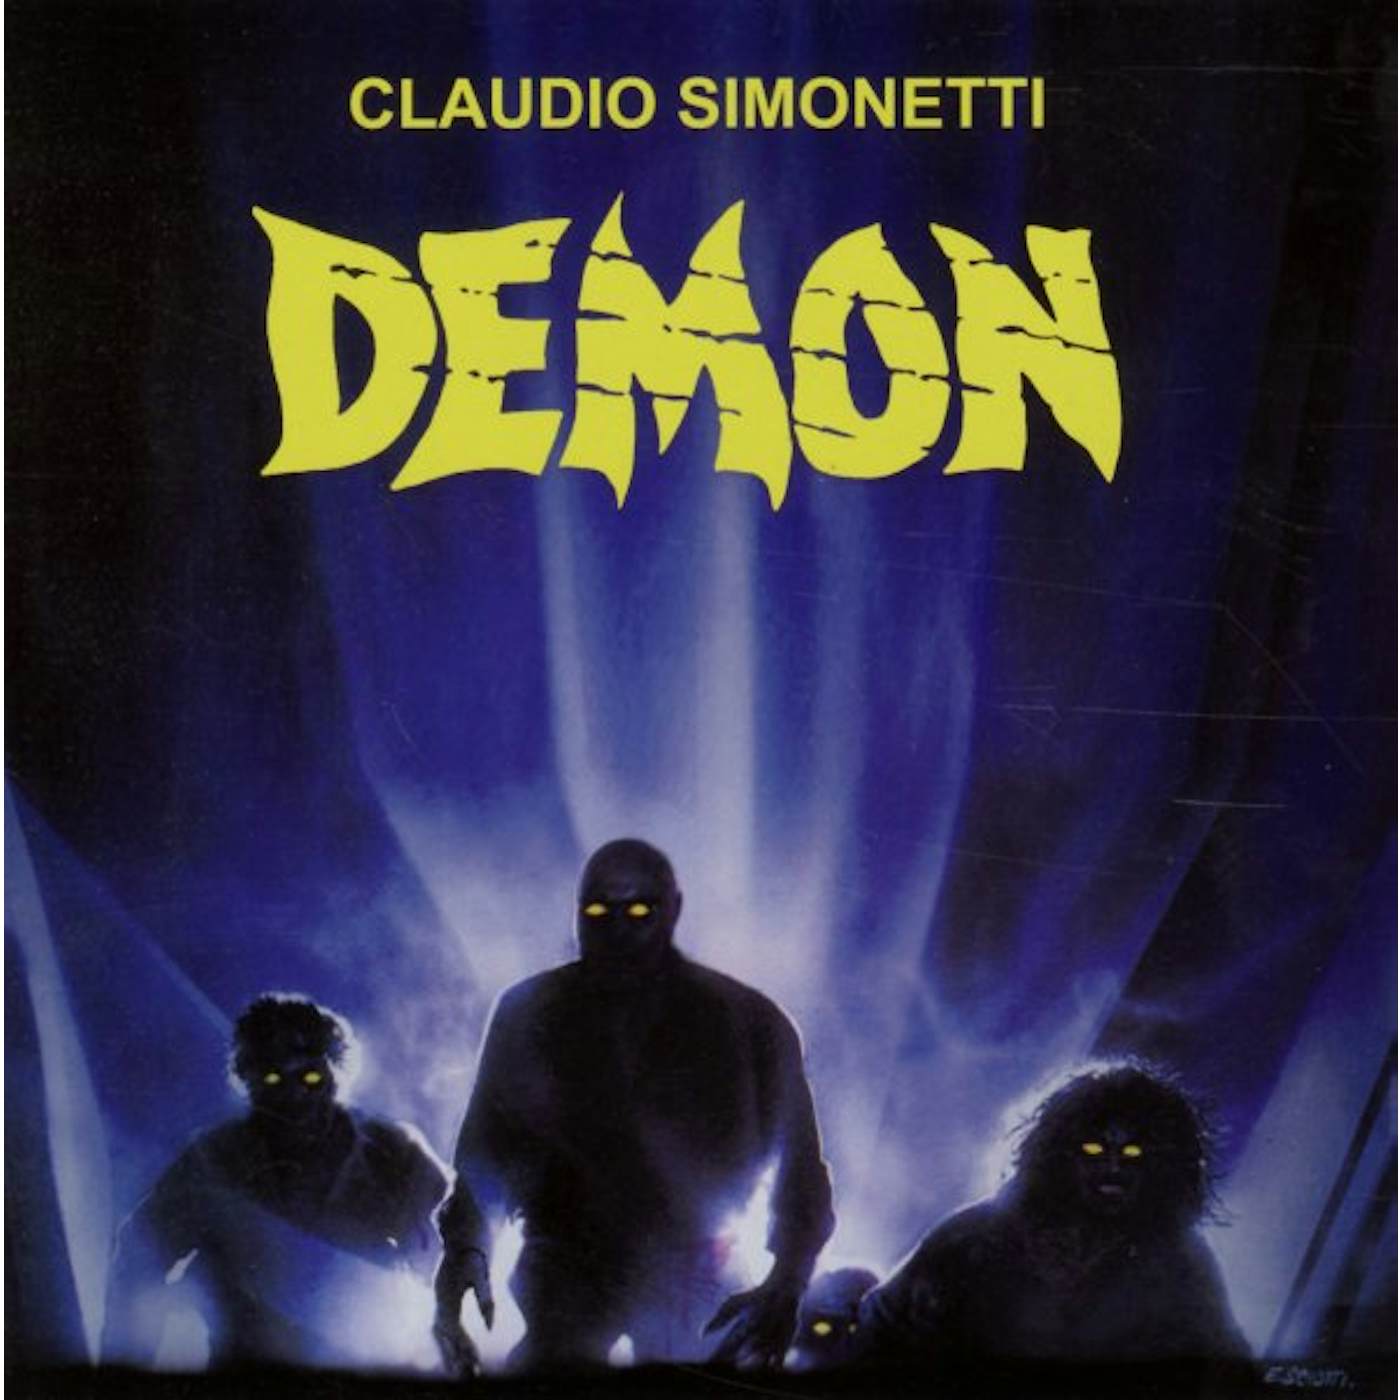 Claudio Simonetti DEMON Vinyl Record